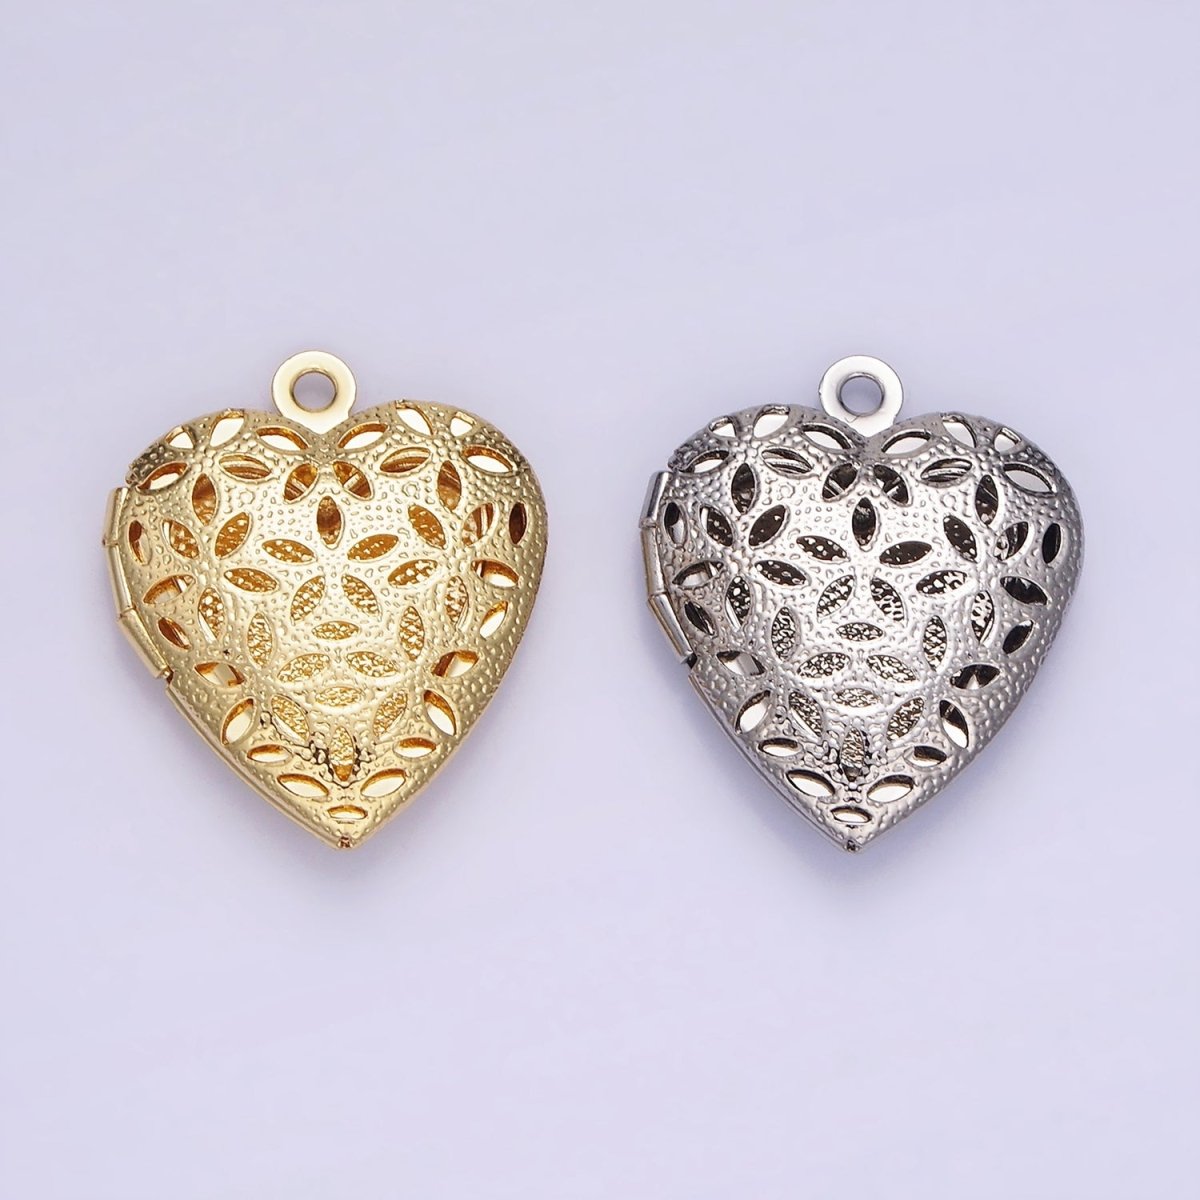 24K Gold Filled Flower Filigree Dotted Heart Locket in Gold & Silver | D399 - DLUXCA